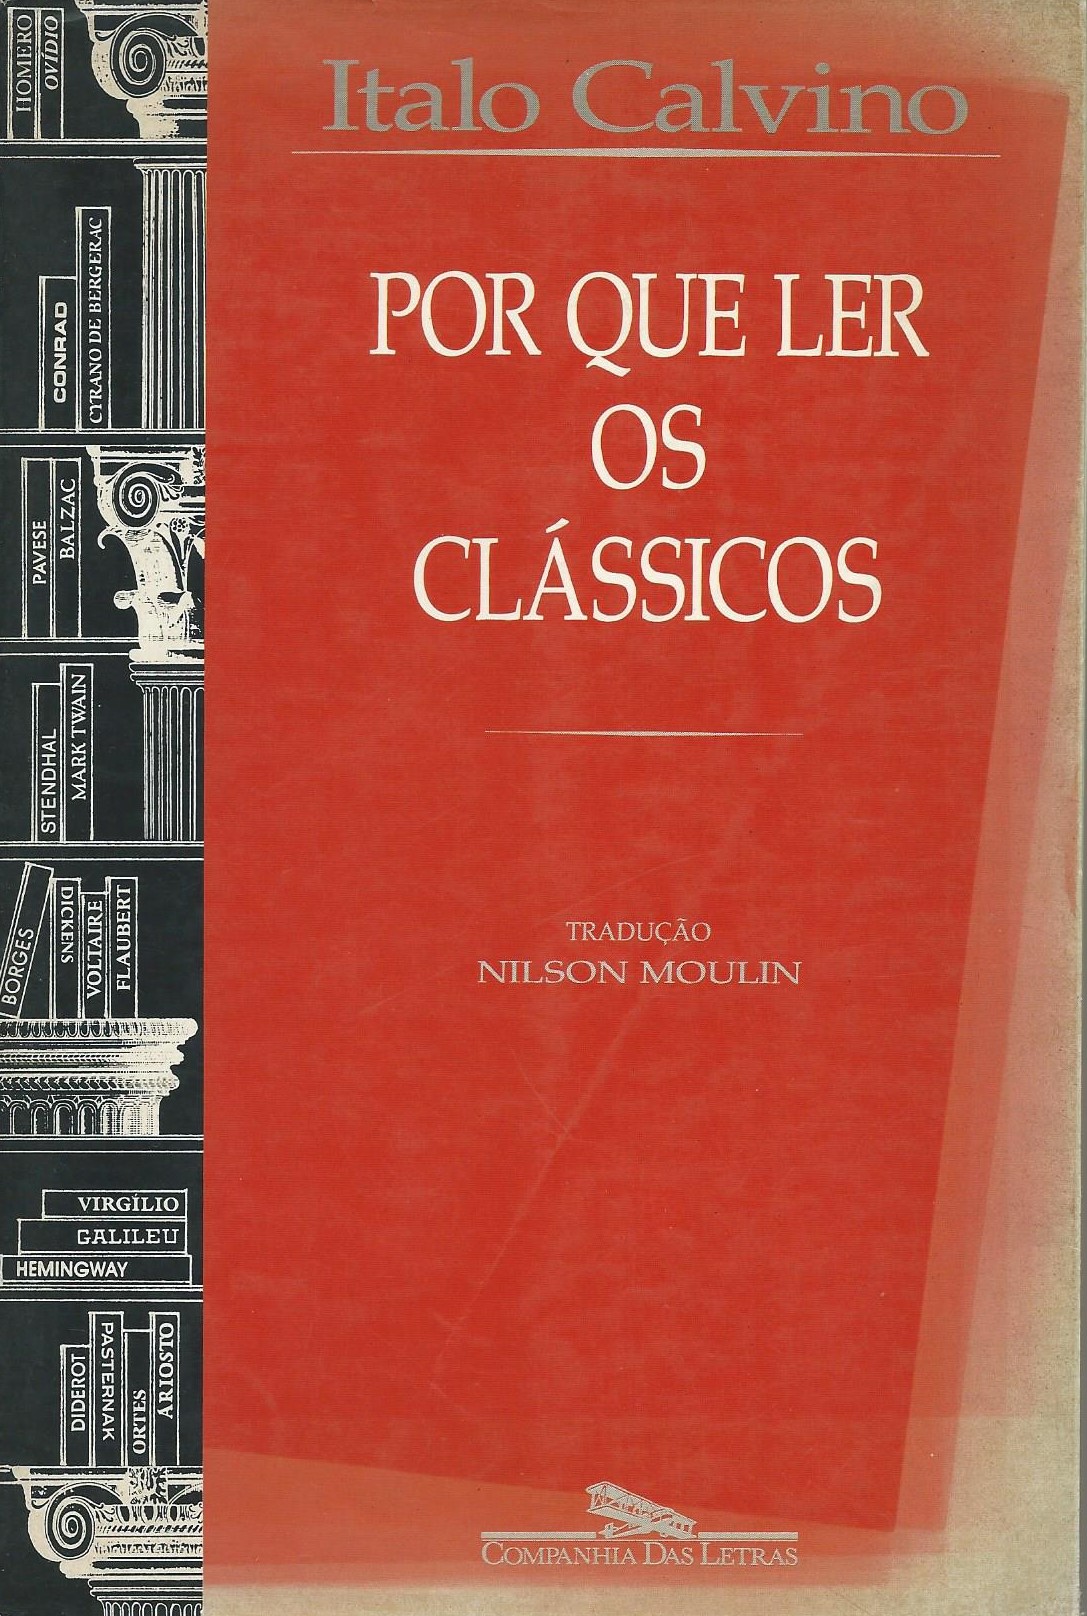 https://www.literaturabrasileira.ufsc.br/_images/obras/por_que_ler_os_classicos_1993_sobrecapa_ok.jpg